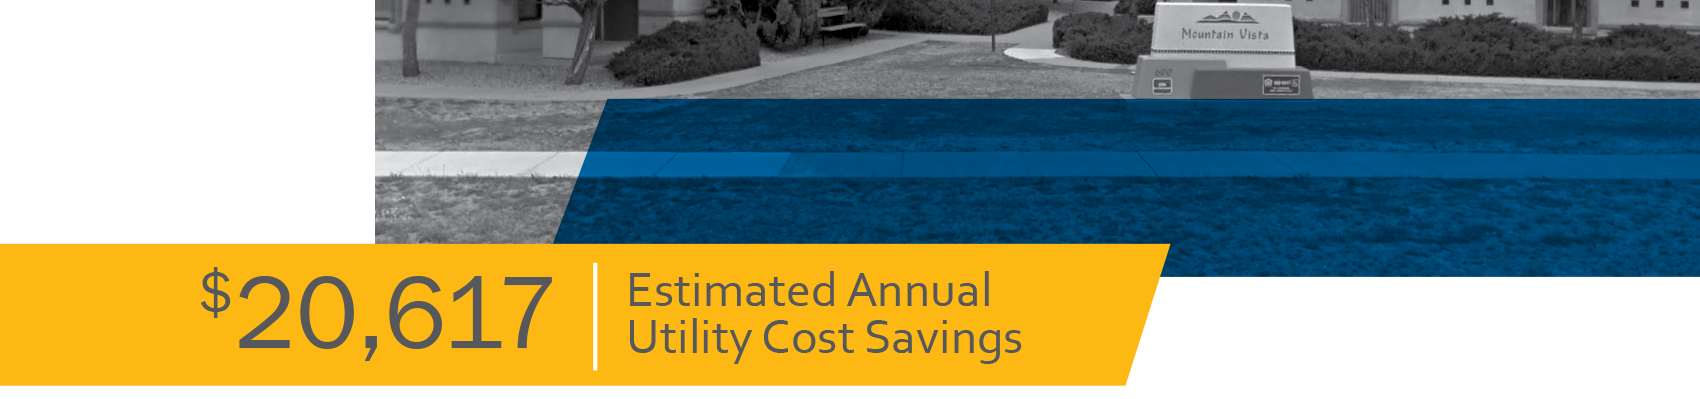 $20,617 Estimated Annual Utility Cost Savings